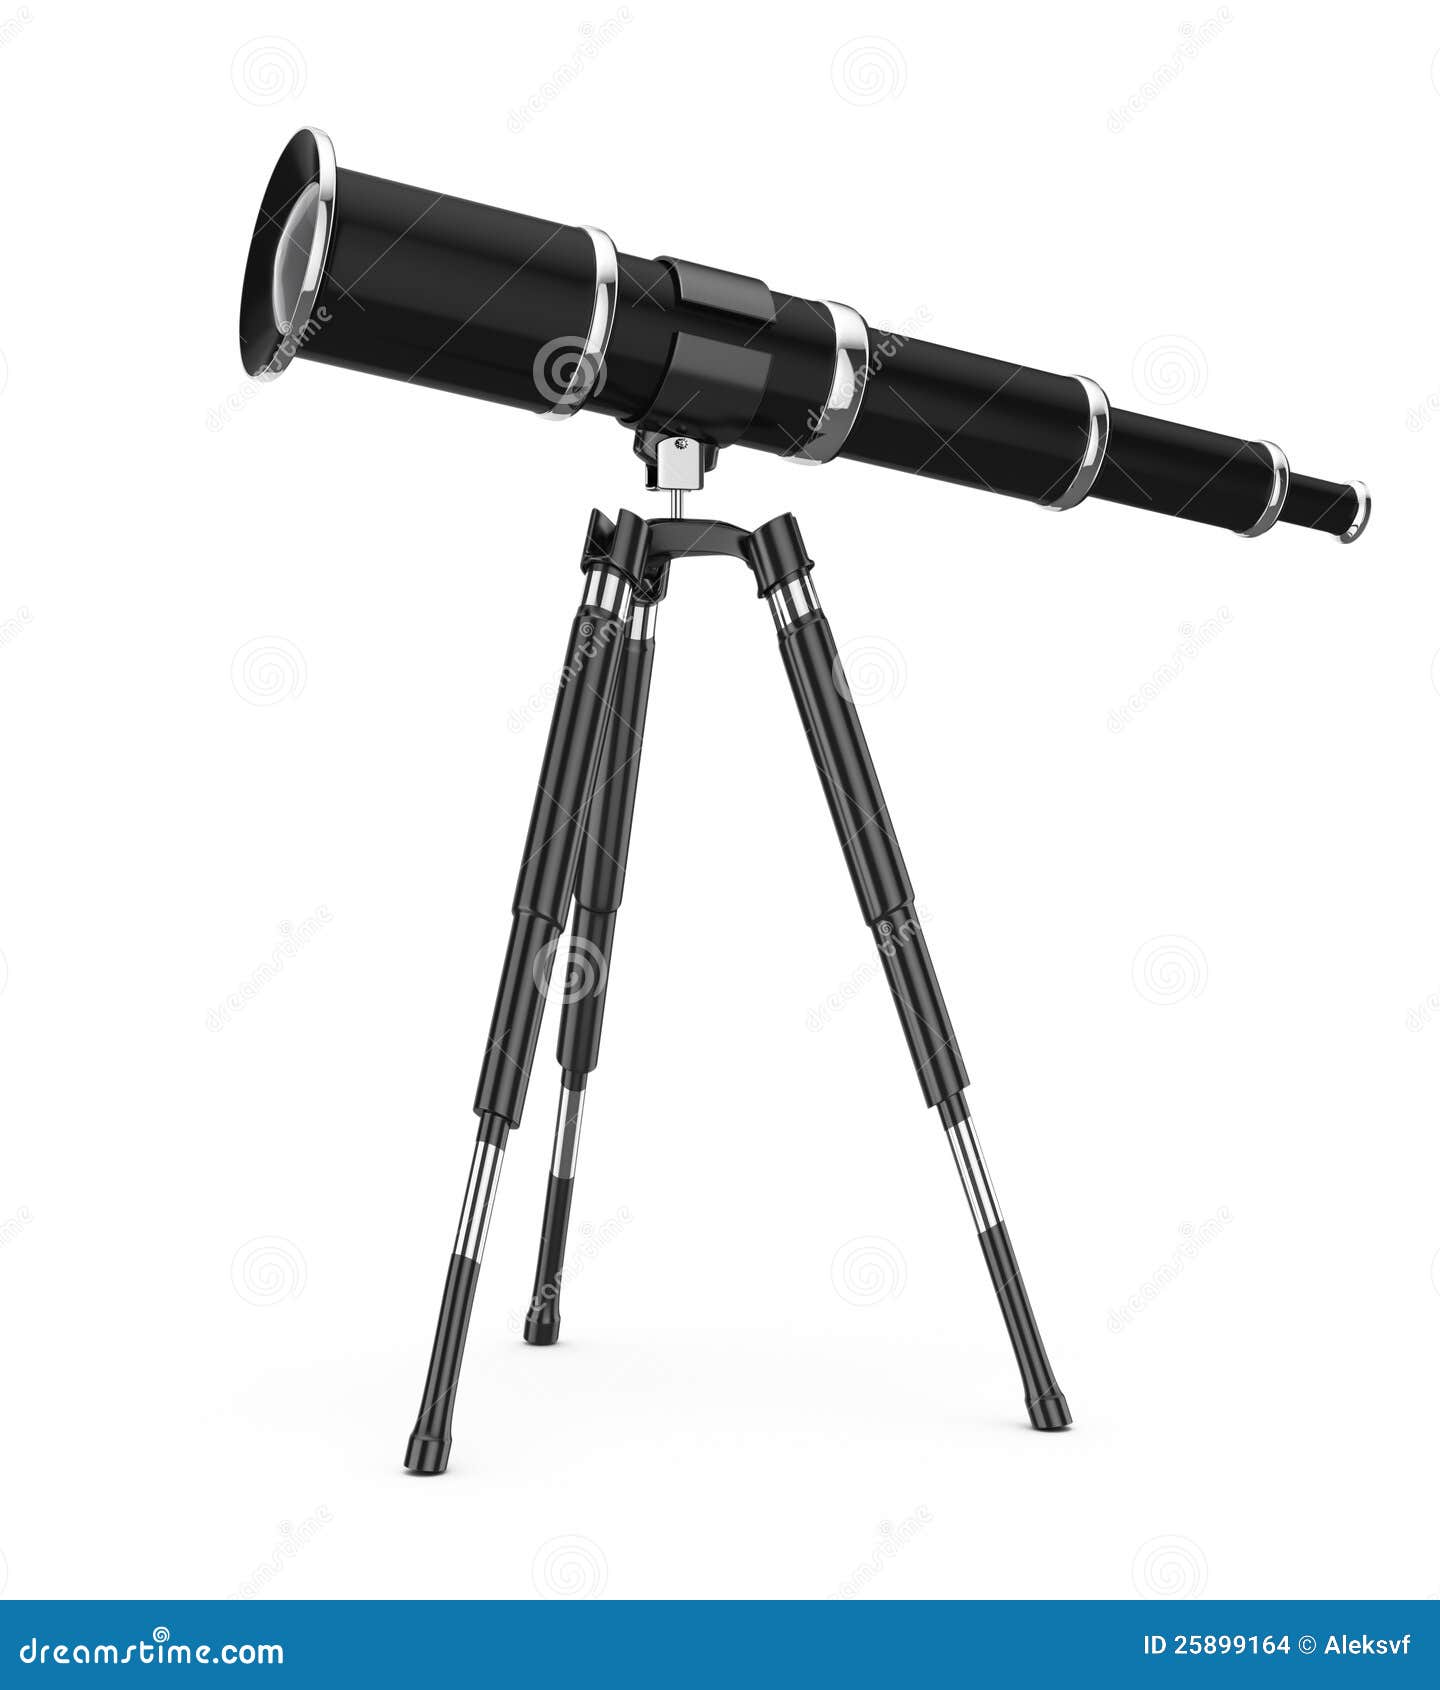 clipart telescope - photo #47